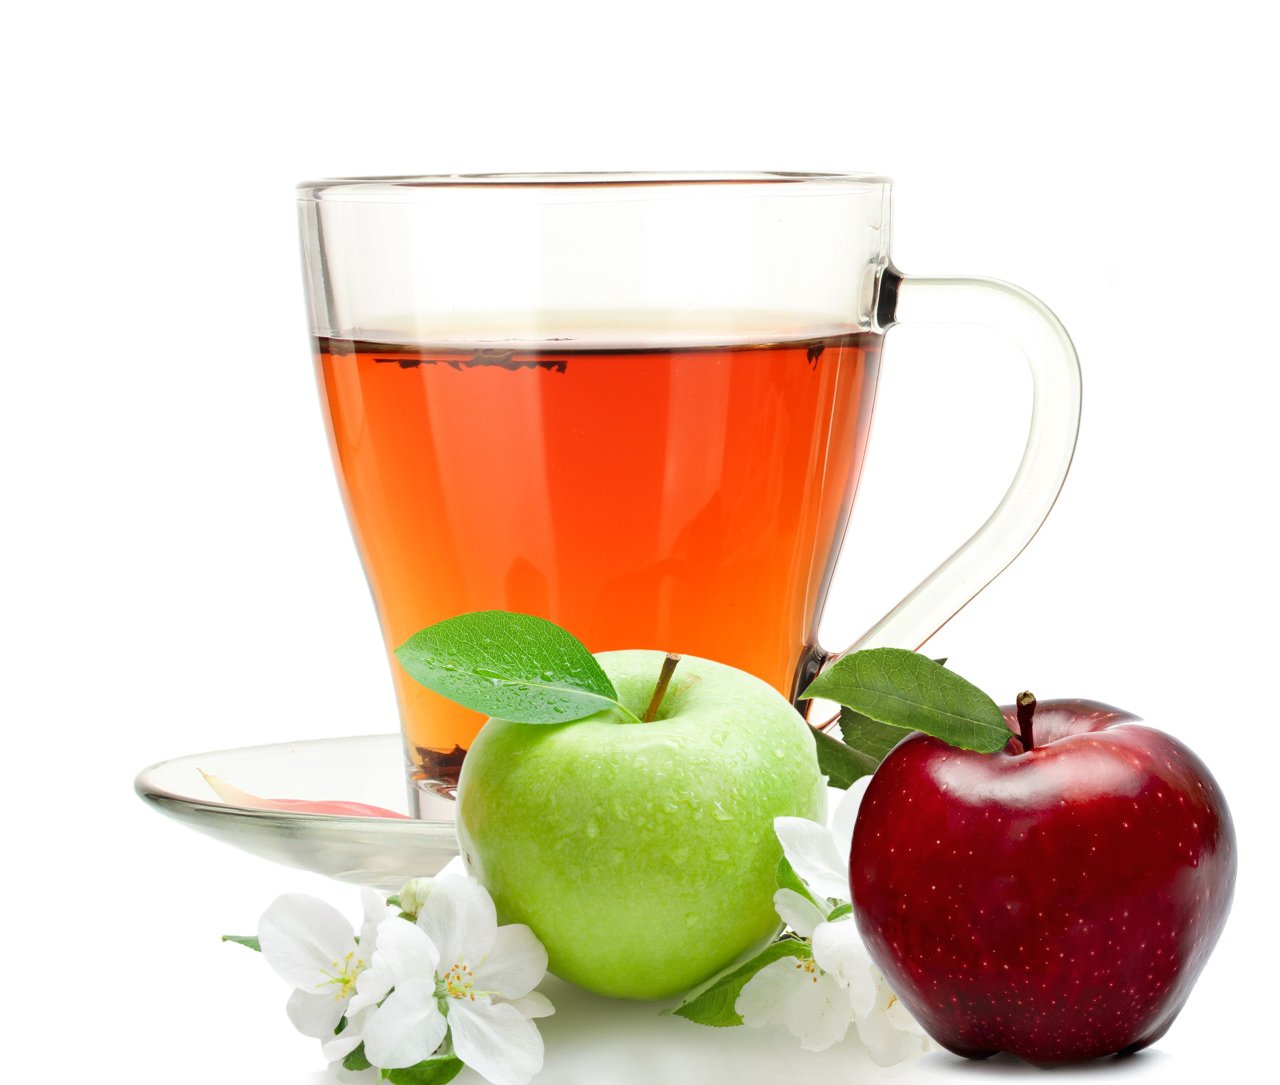 HazerBaba Apple Tea 125 g /4.41 oz